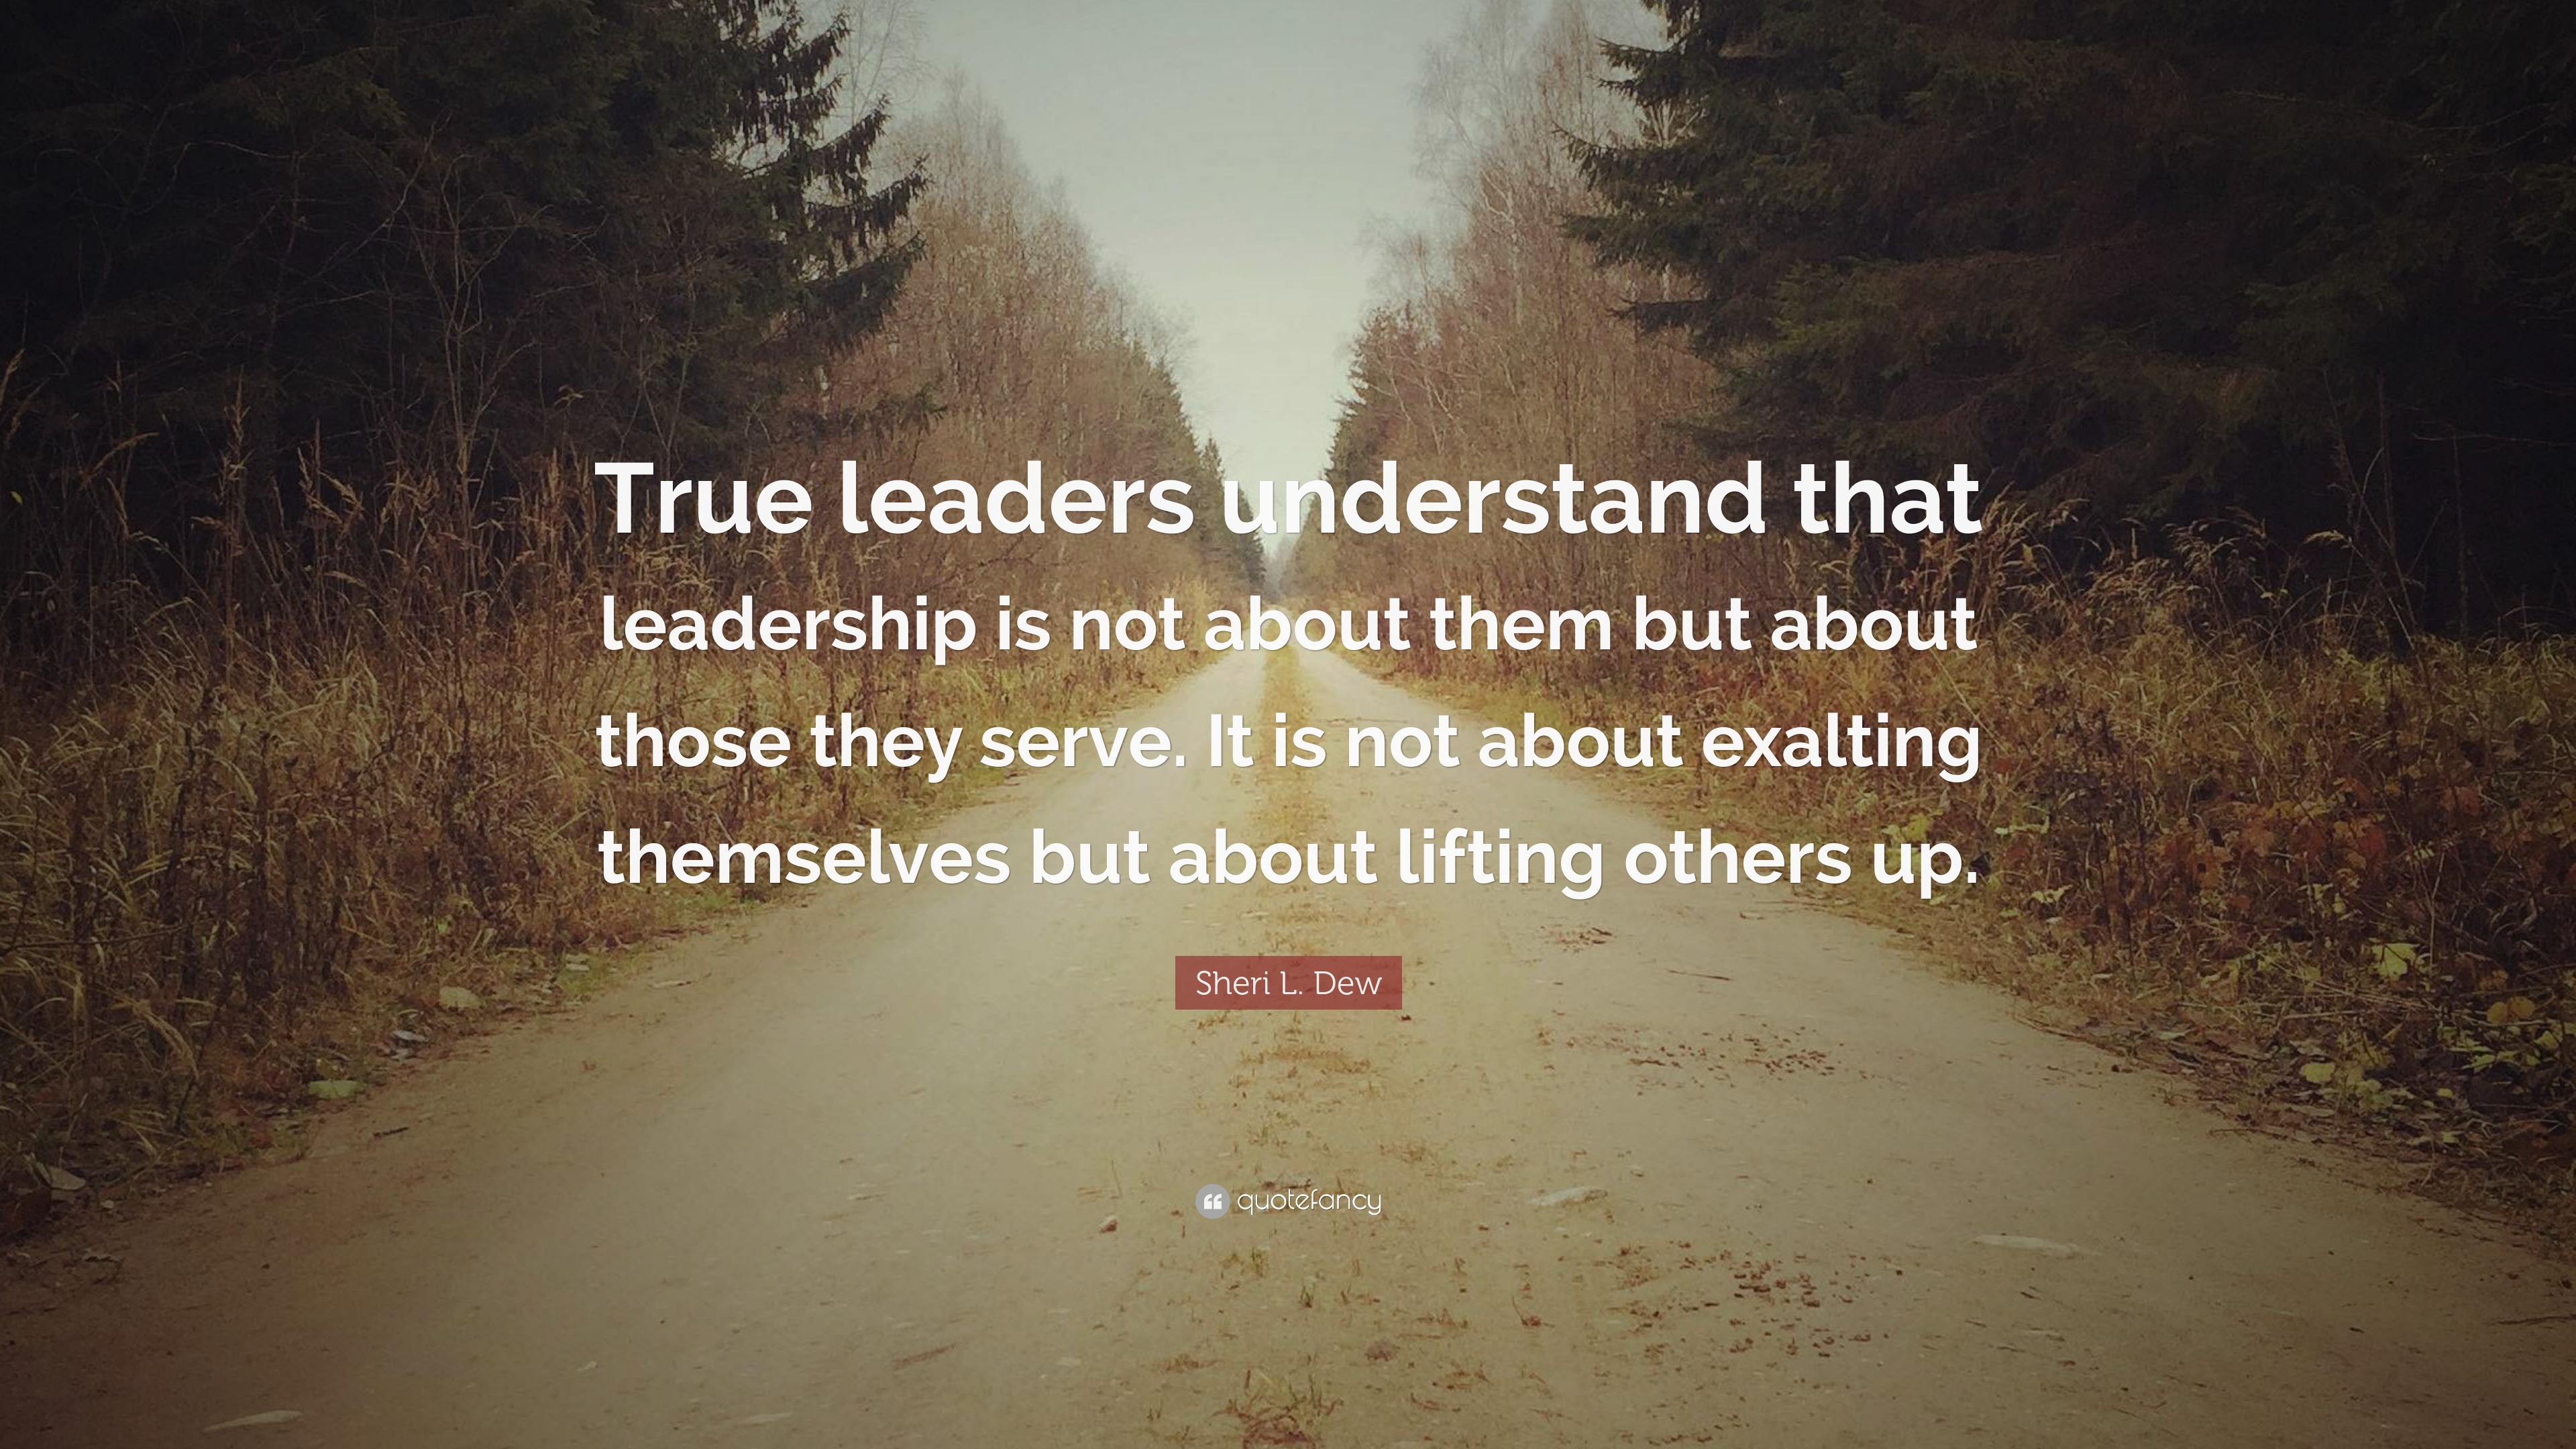 Sheri L. Dew Quote: “True leaders understand that leadership is not